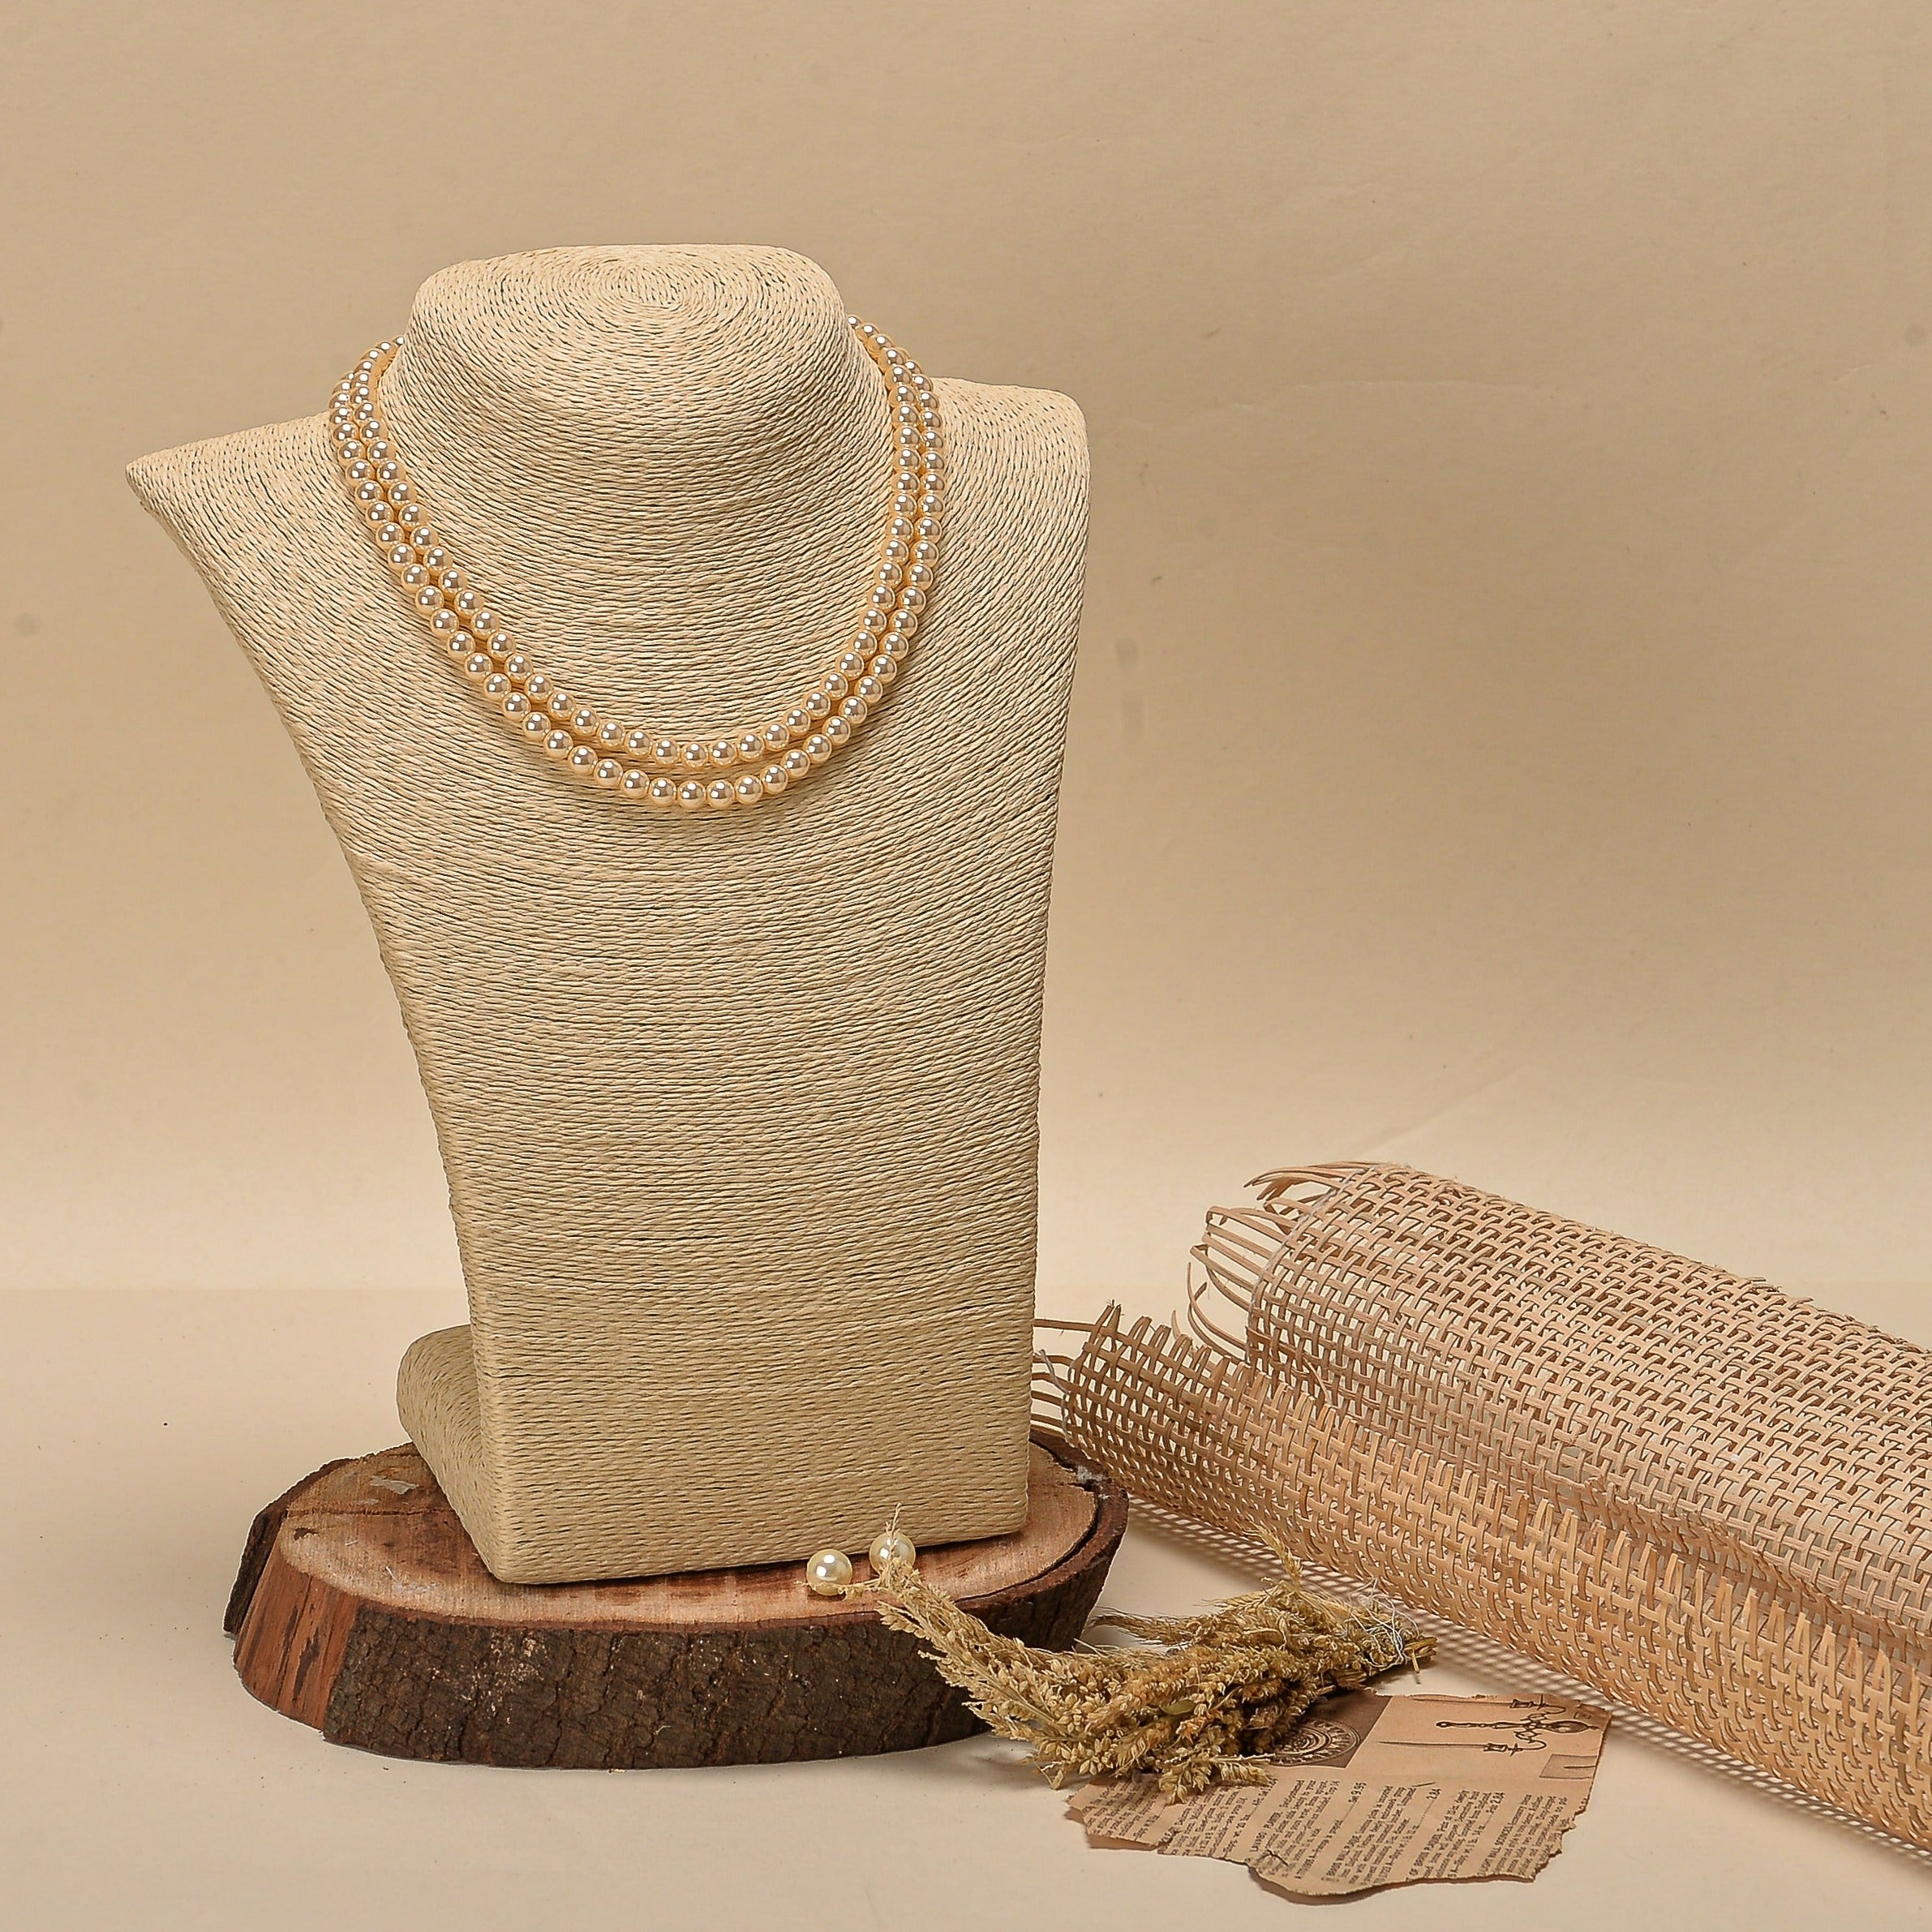 Swarovski Pearl Necklace - Light Gold